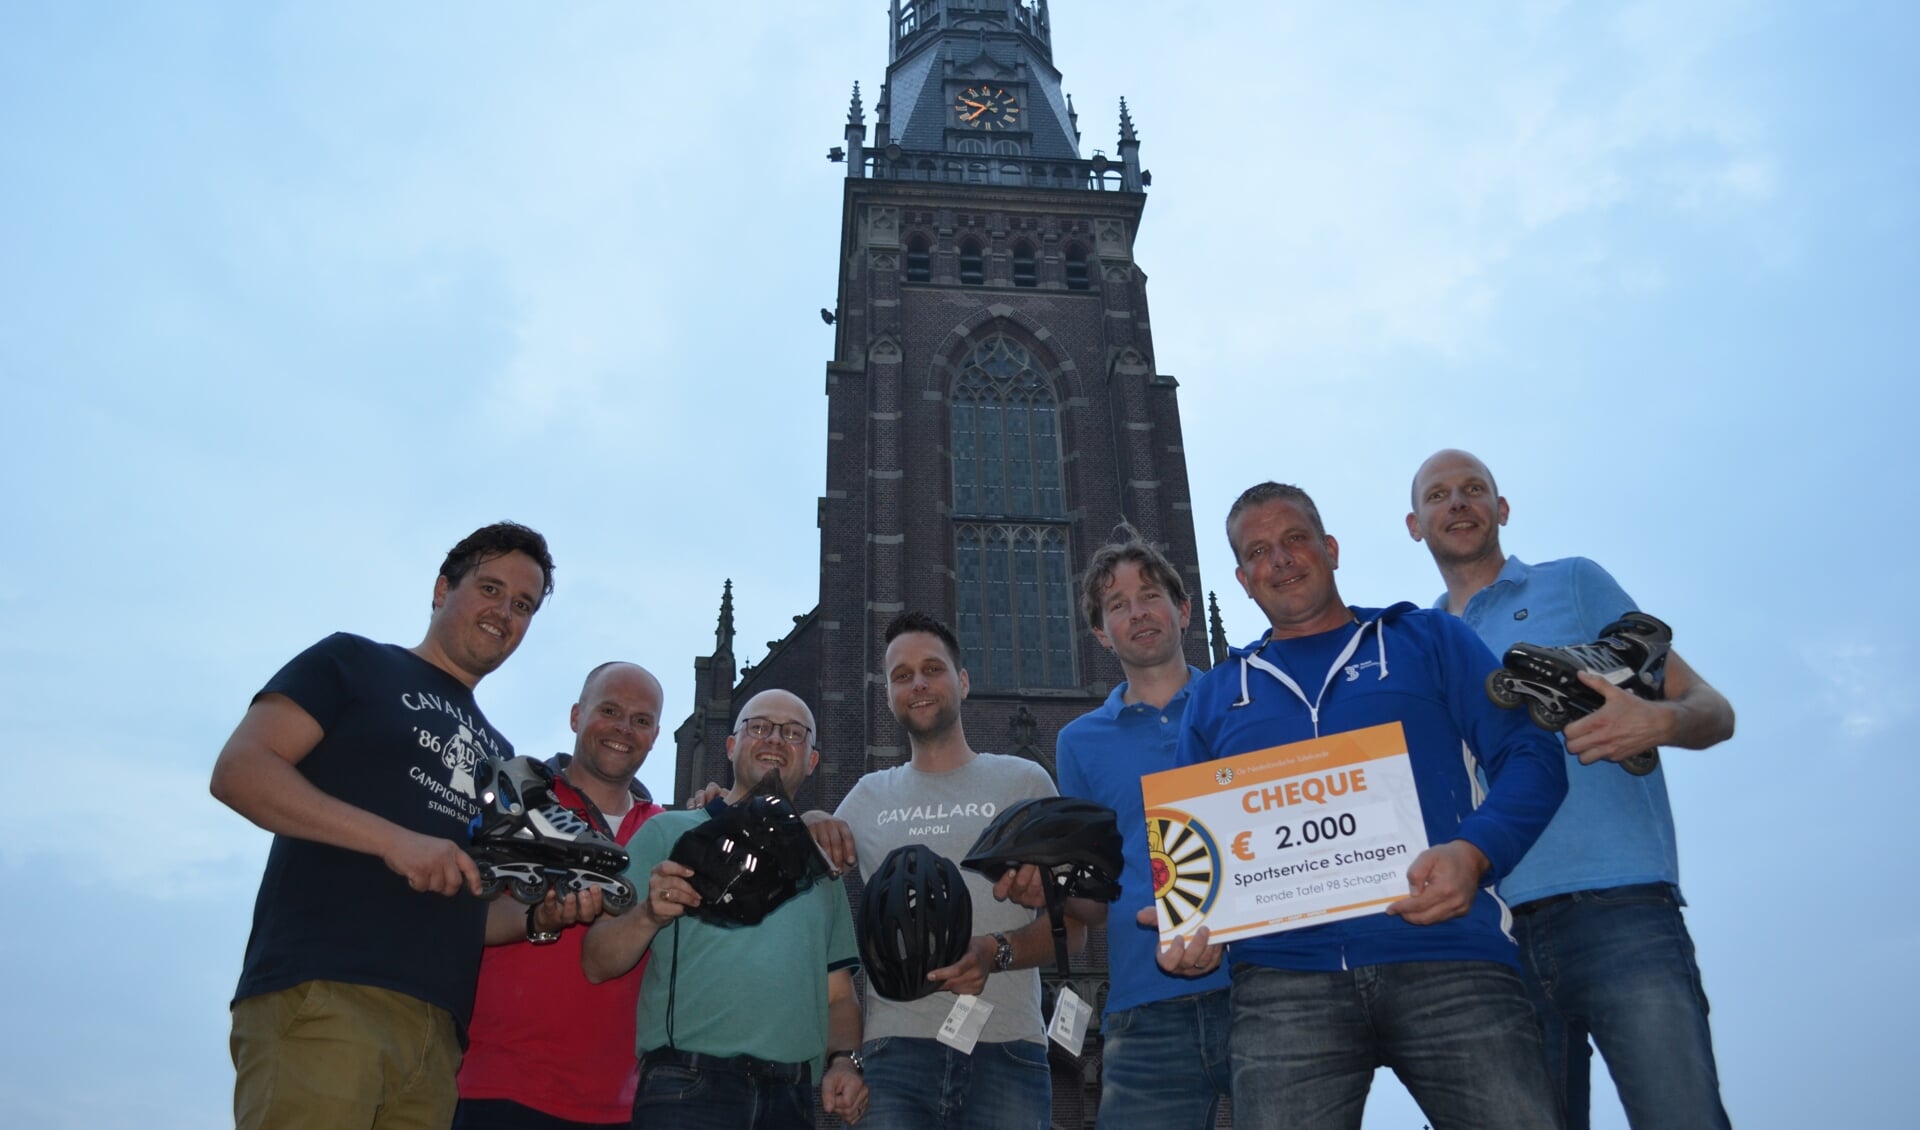 De Ronde Tafel doneert tweeduizend euro aan Team Sportservice Schagen. (Foto: Team Sportservice Schagen)